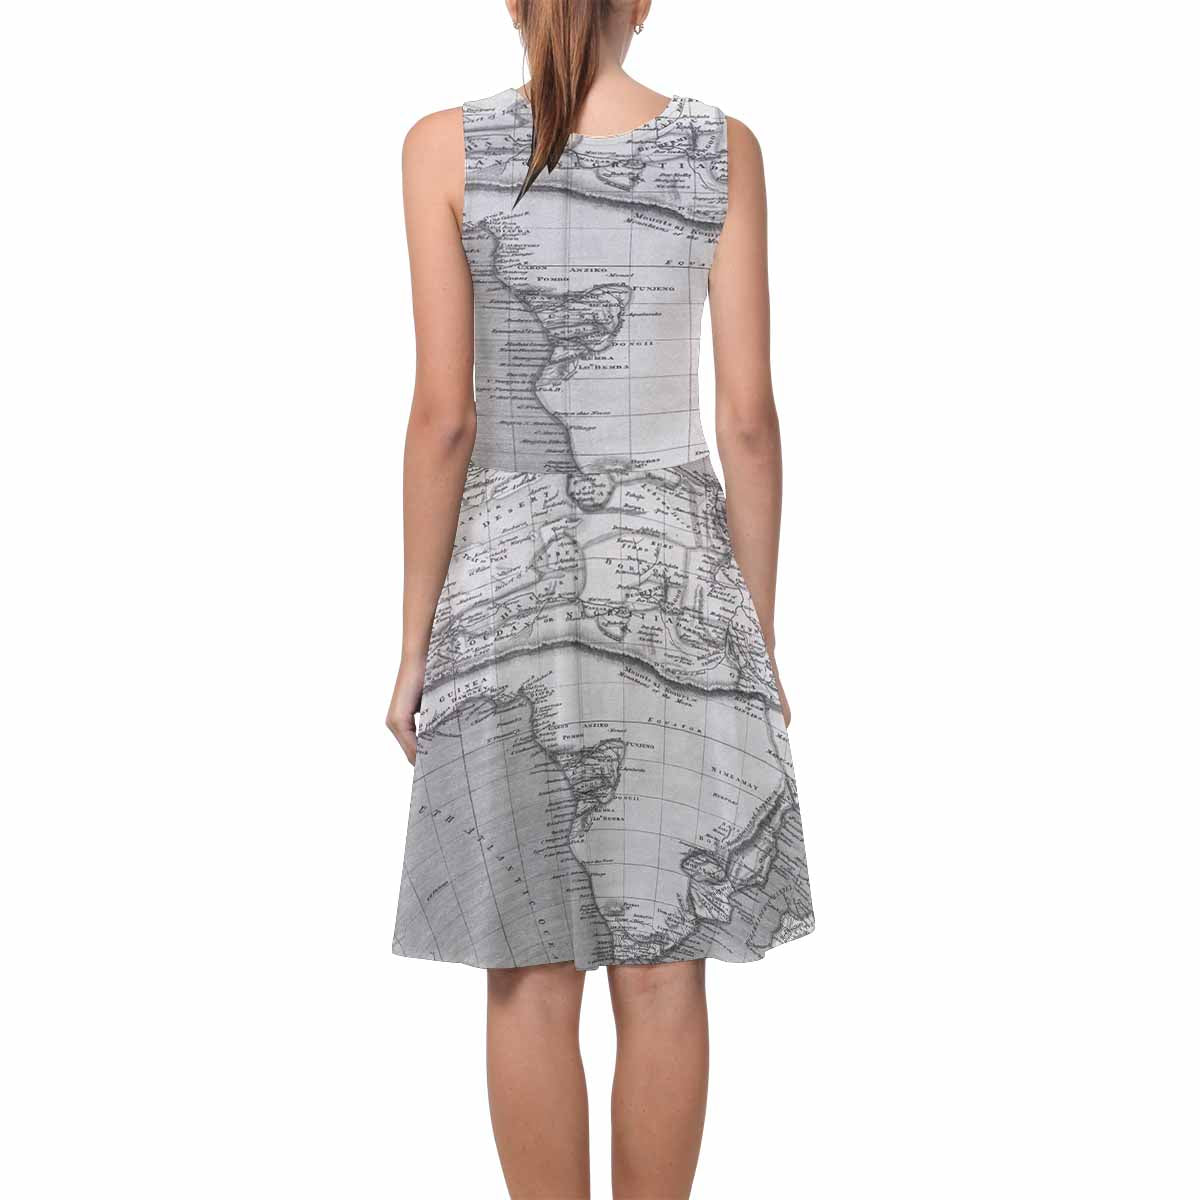 Antique Map casual summer dress, MODEL 09534, design 12